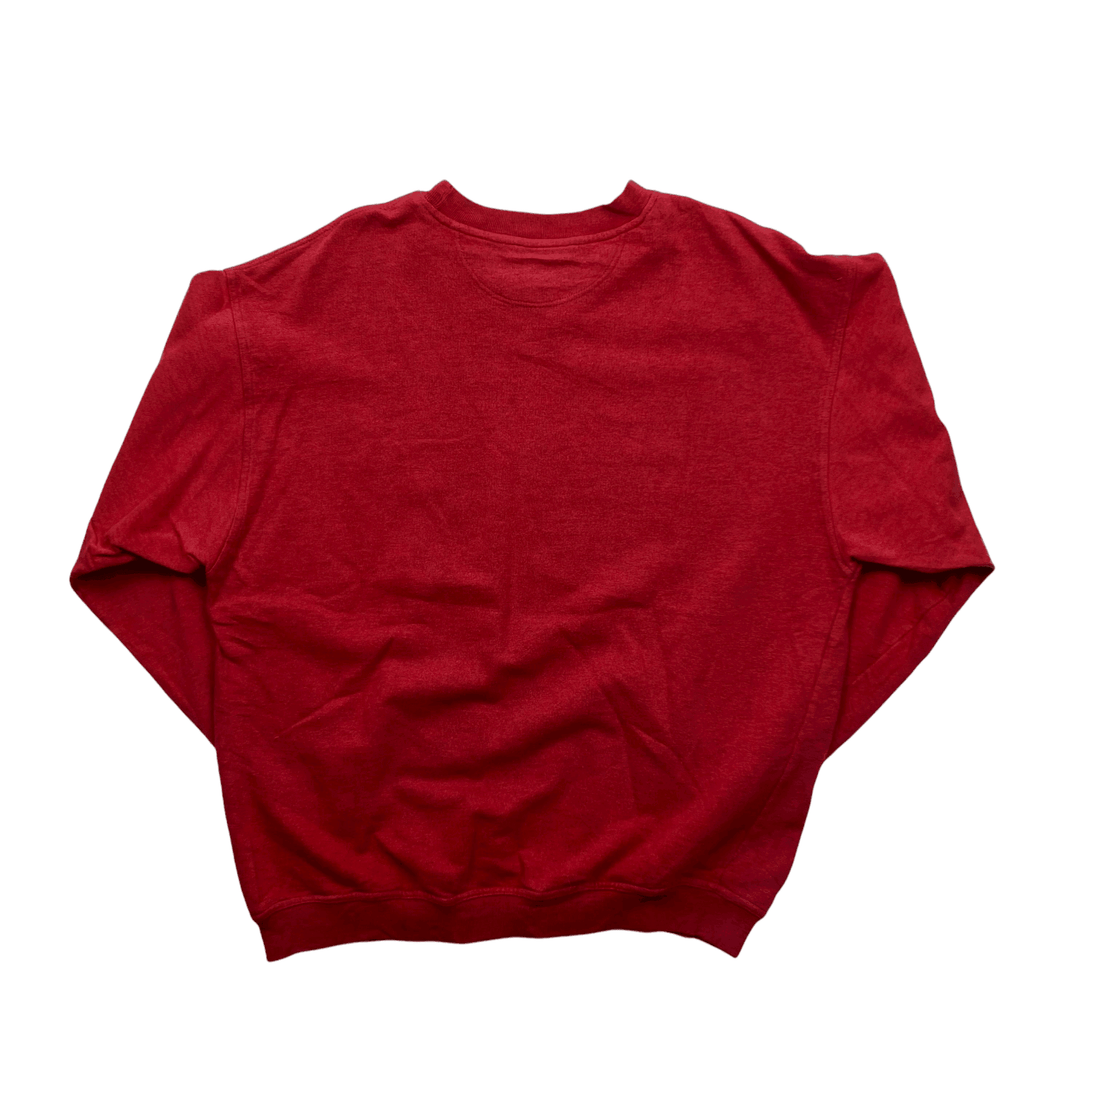 Vintage 90s Red/ Burgundy Adidas Sweatshirt - Medium - The Streetwear Studio